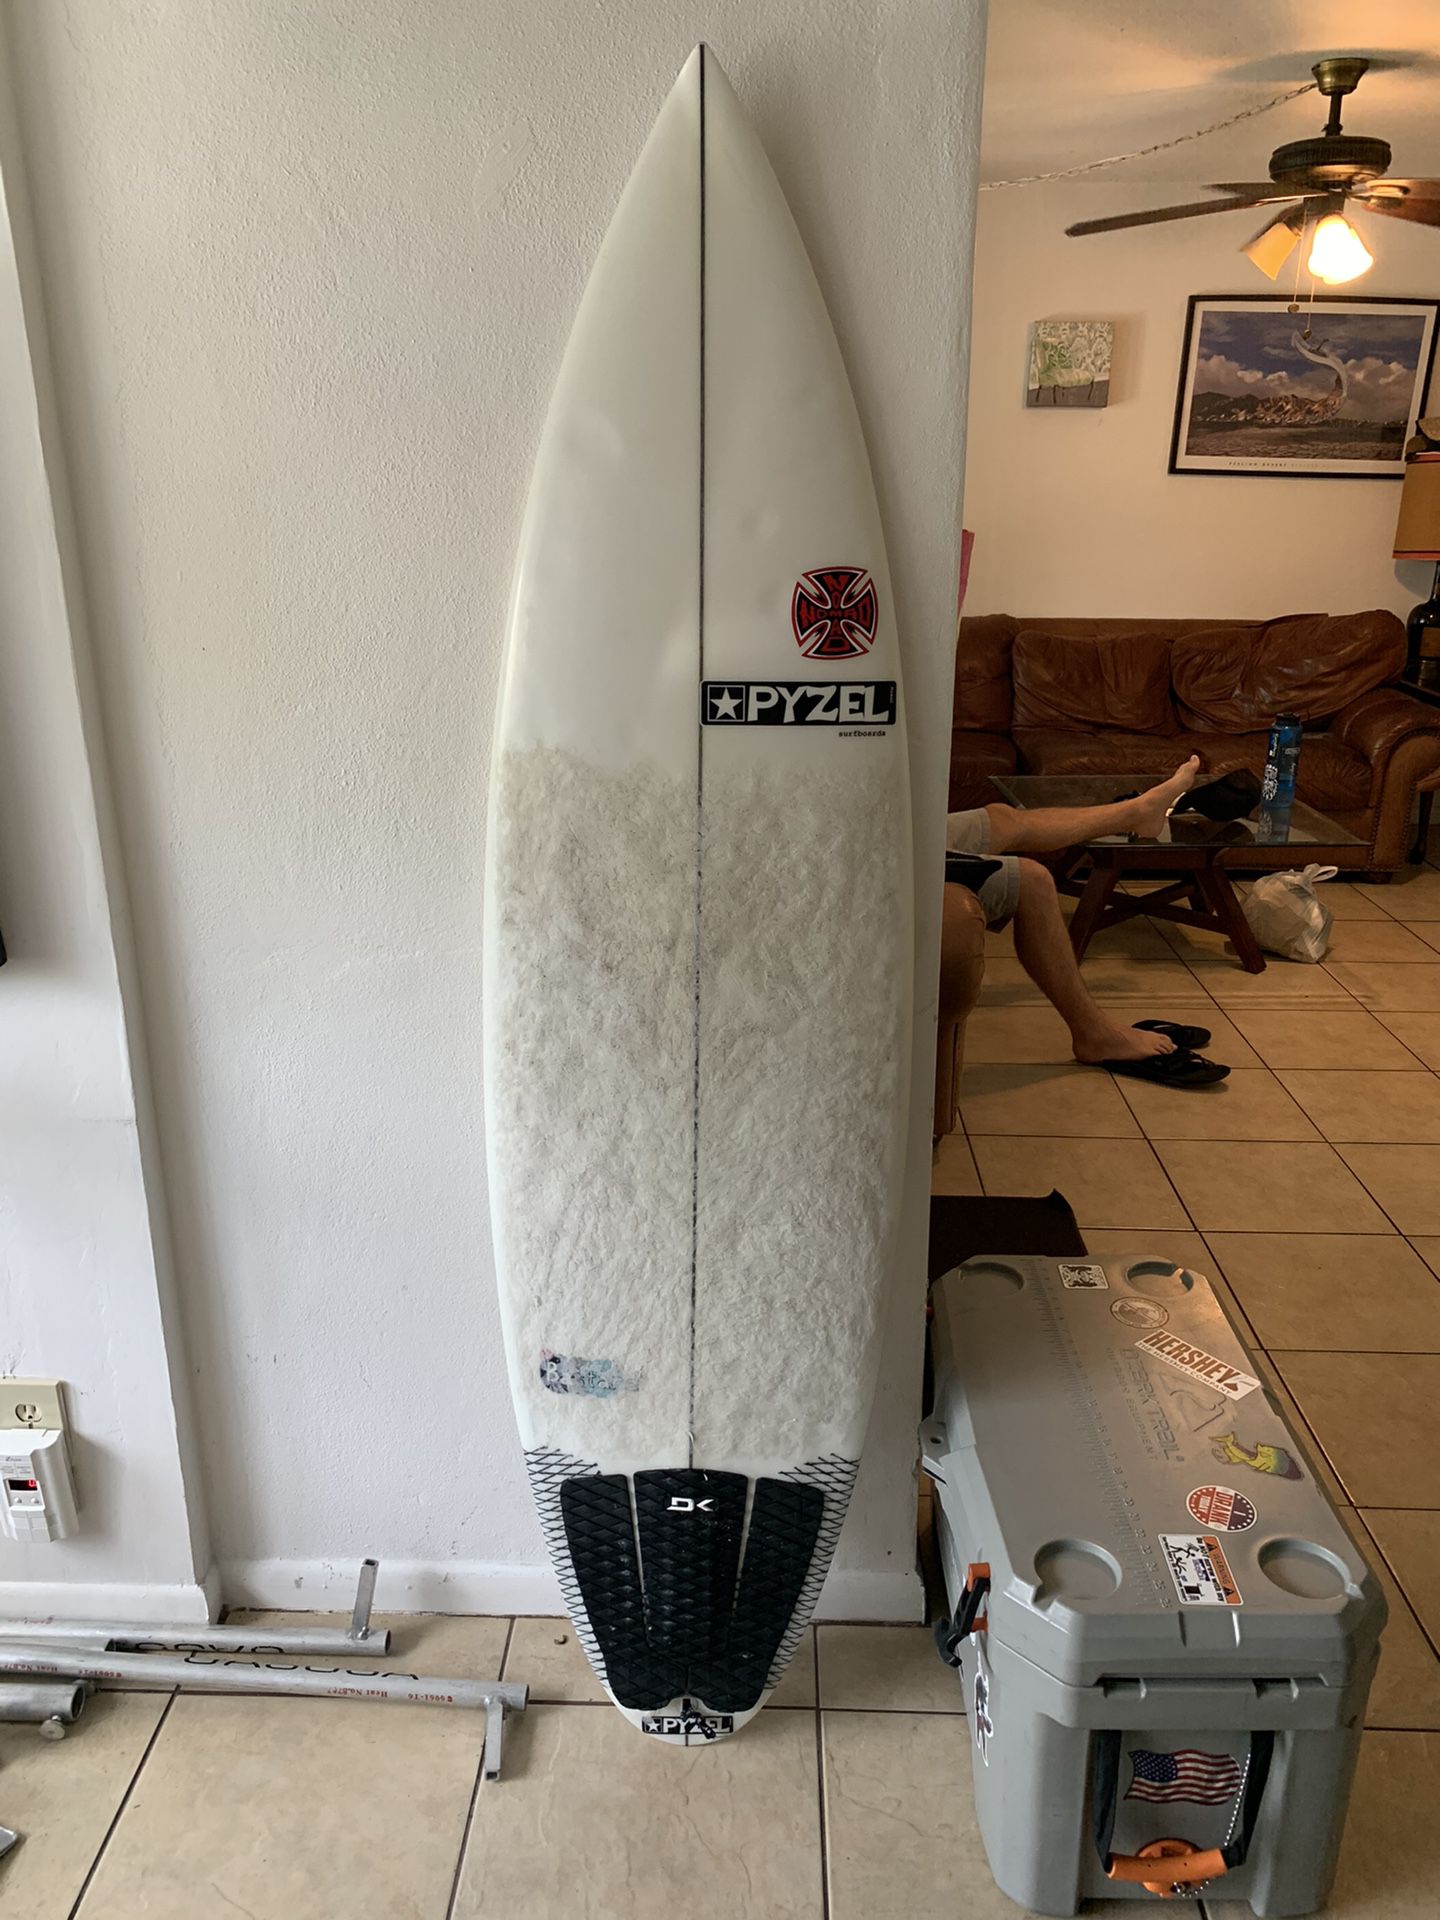 Pyzel Bastard 6’3” shortboard surfboard